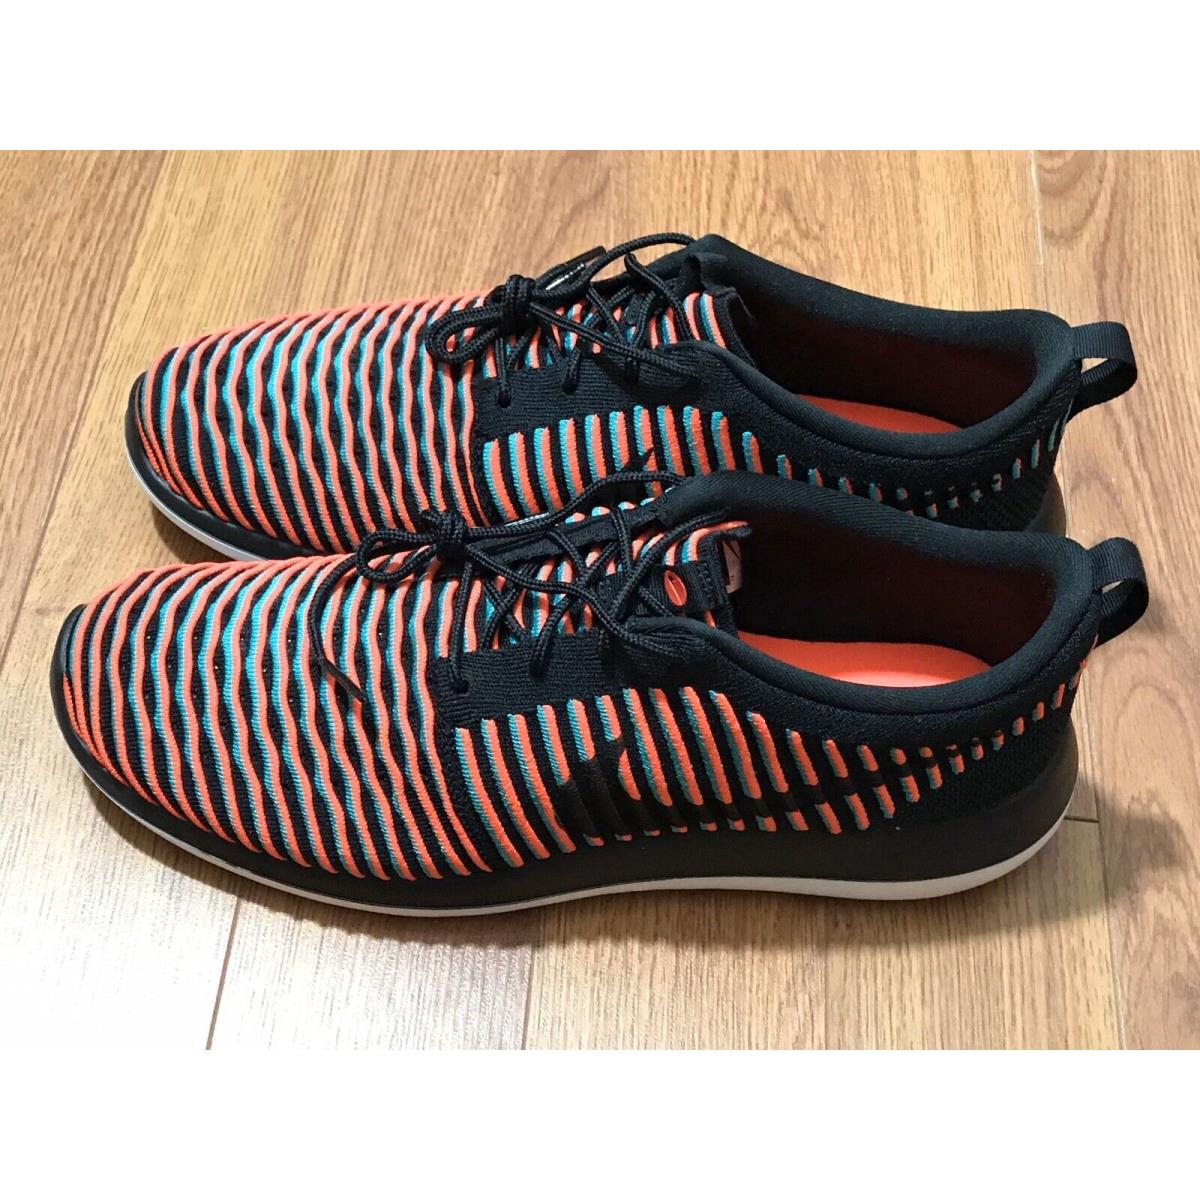 Nike shoes Roshe Two Flyknit - Black, Bright Crimson 5